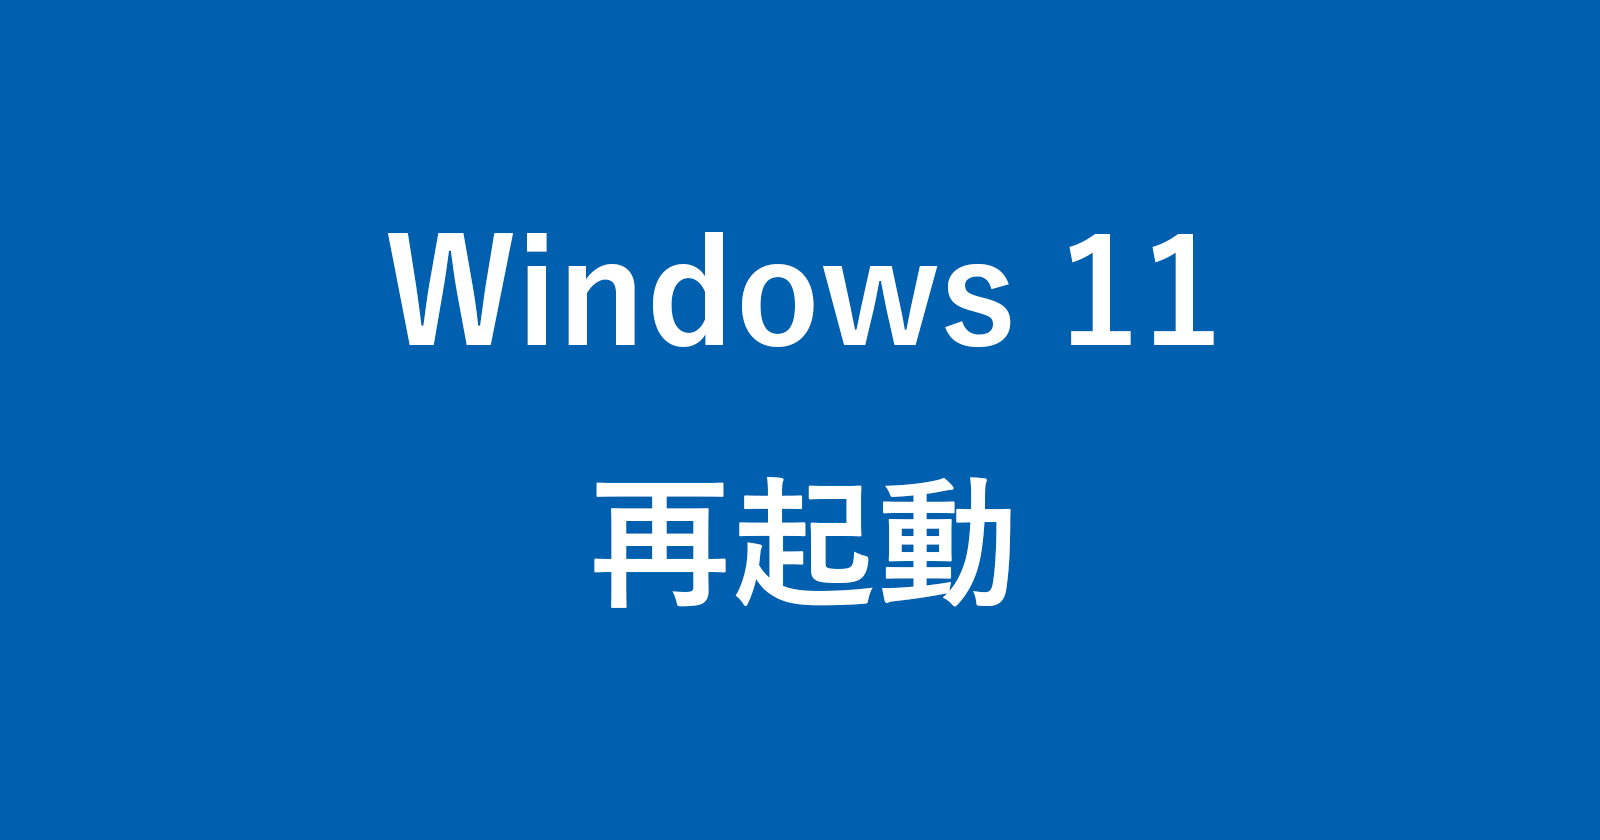 windows 11 reboot